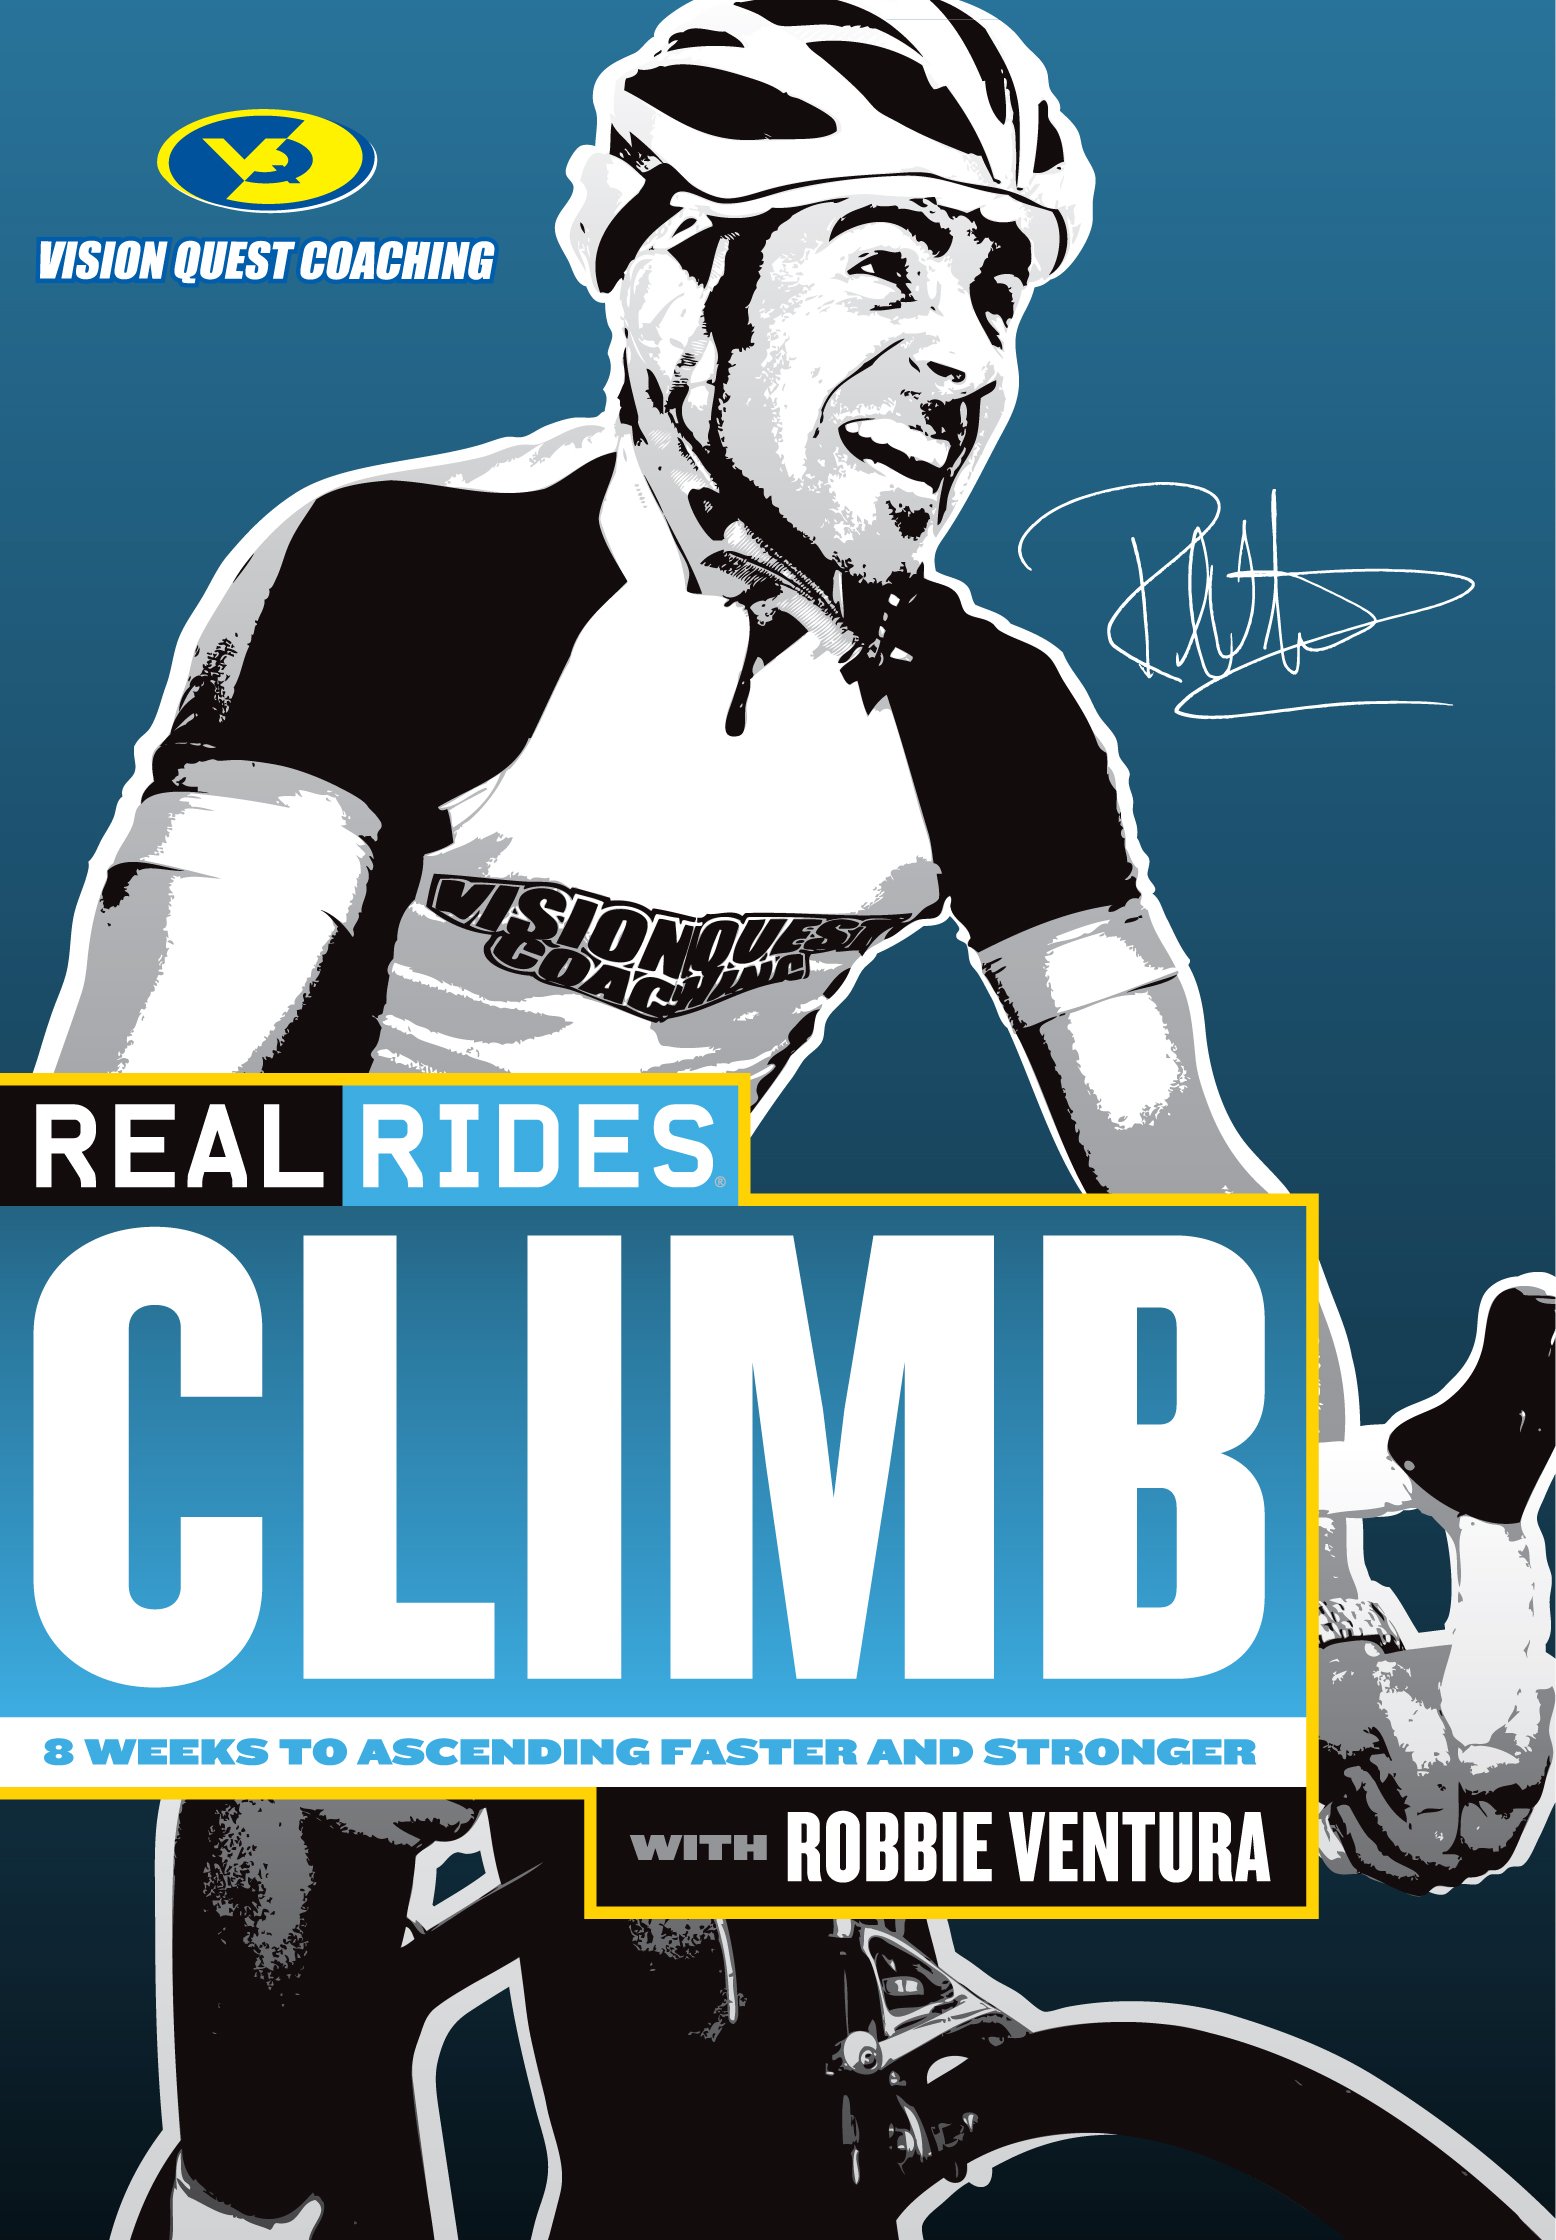 CycleOps Real Rides Climb DVD